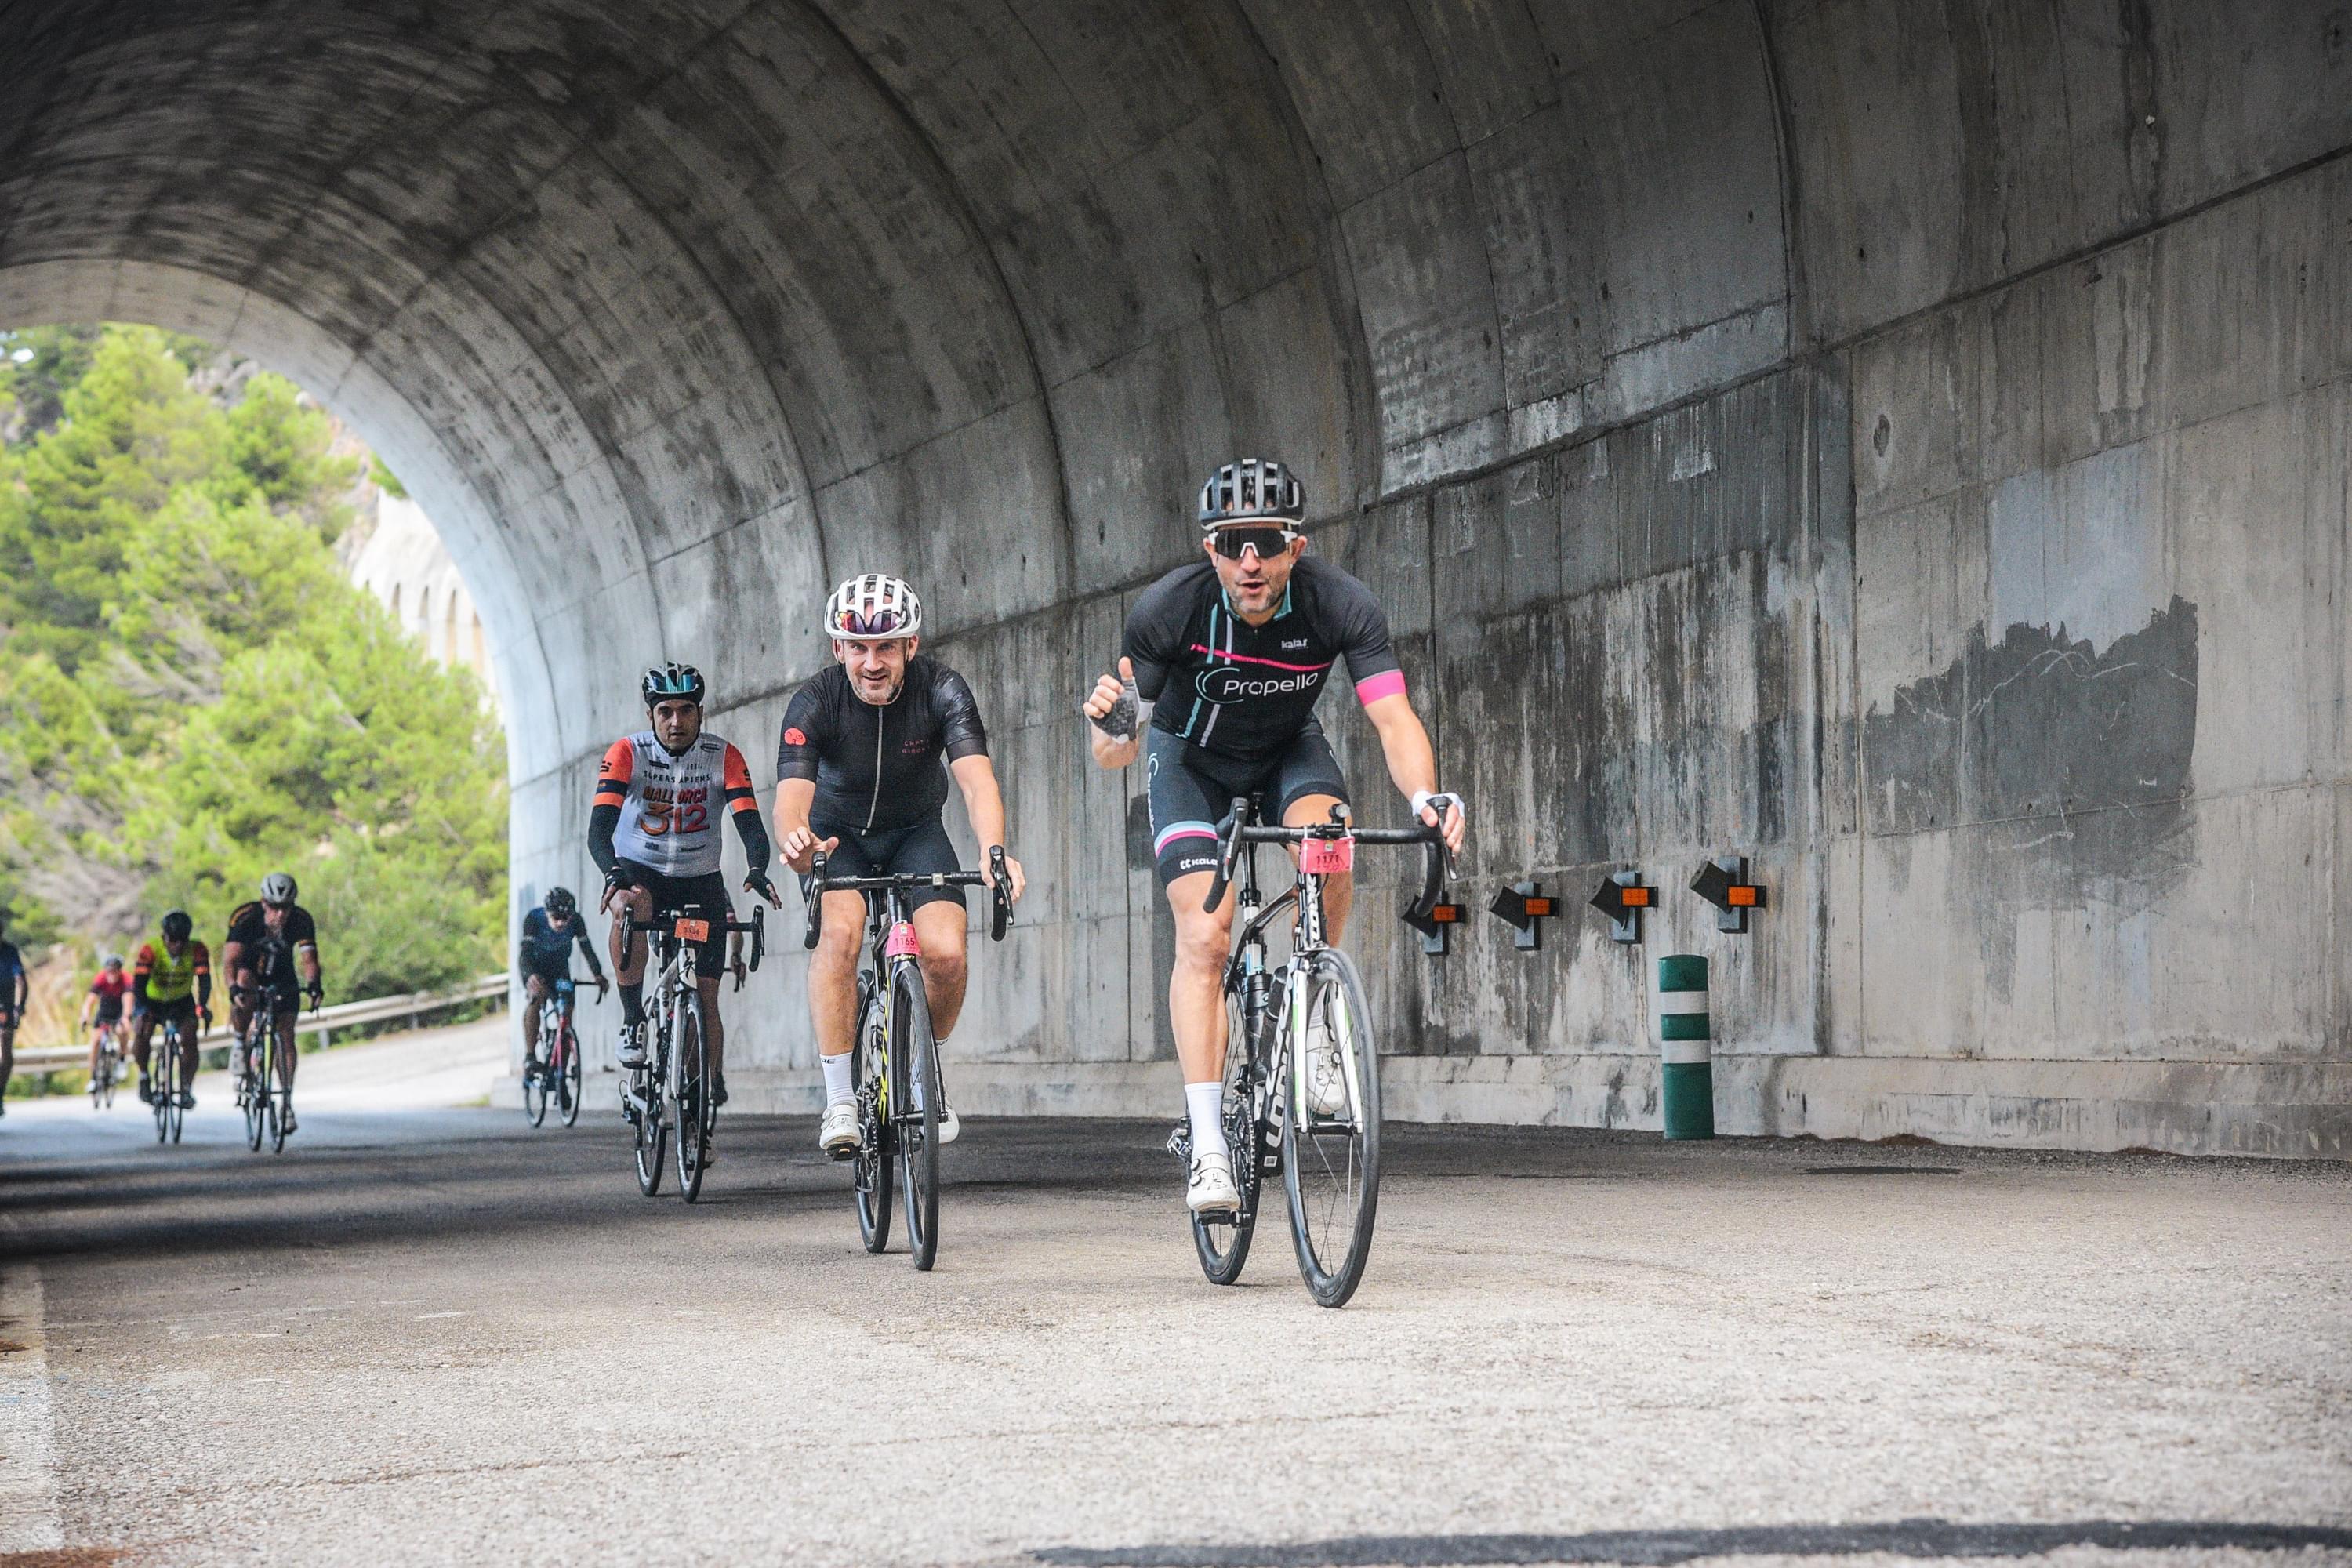 Rob cycling through tunnel 4000x2667